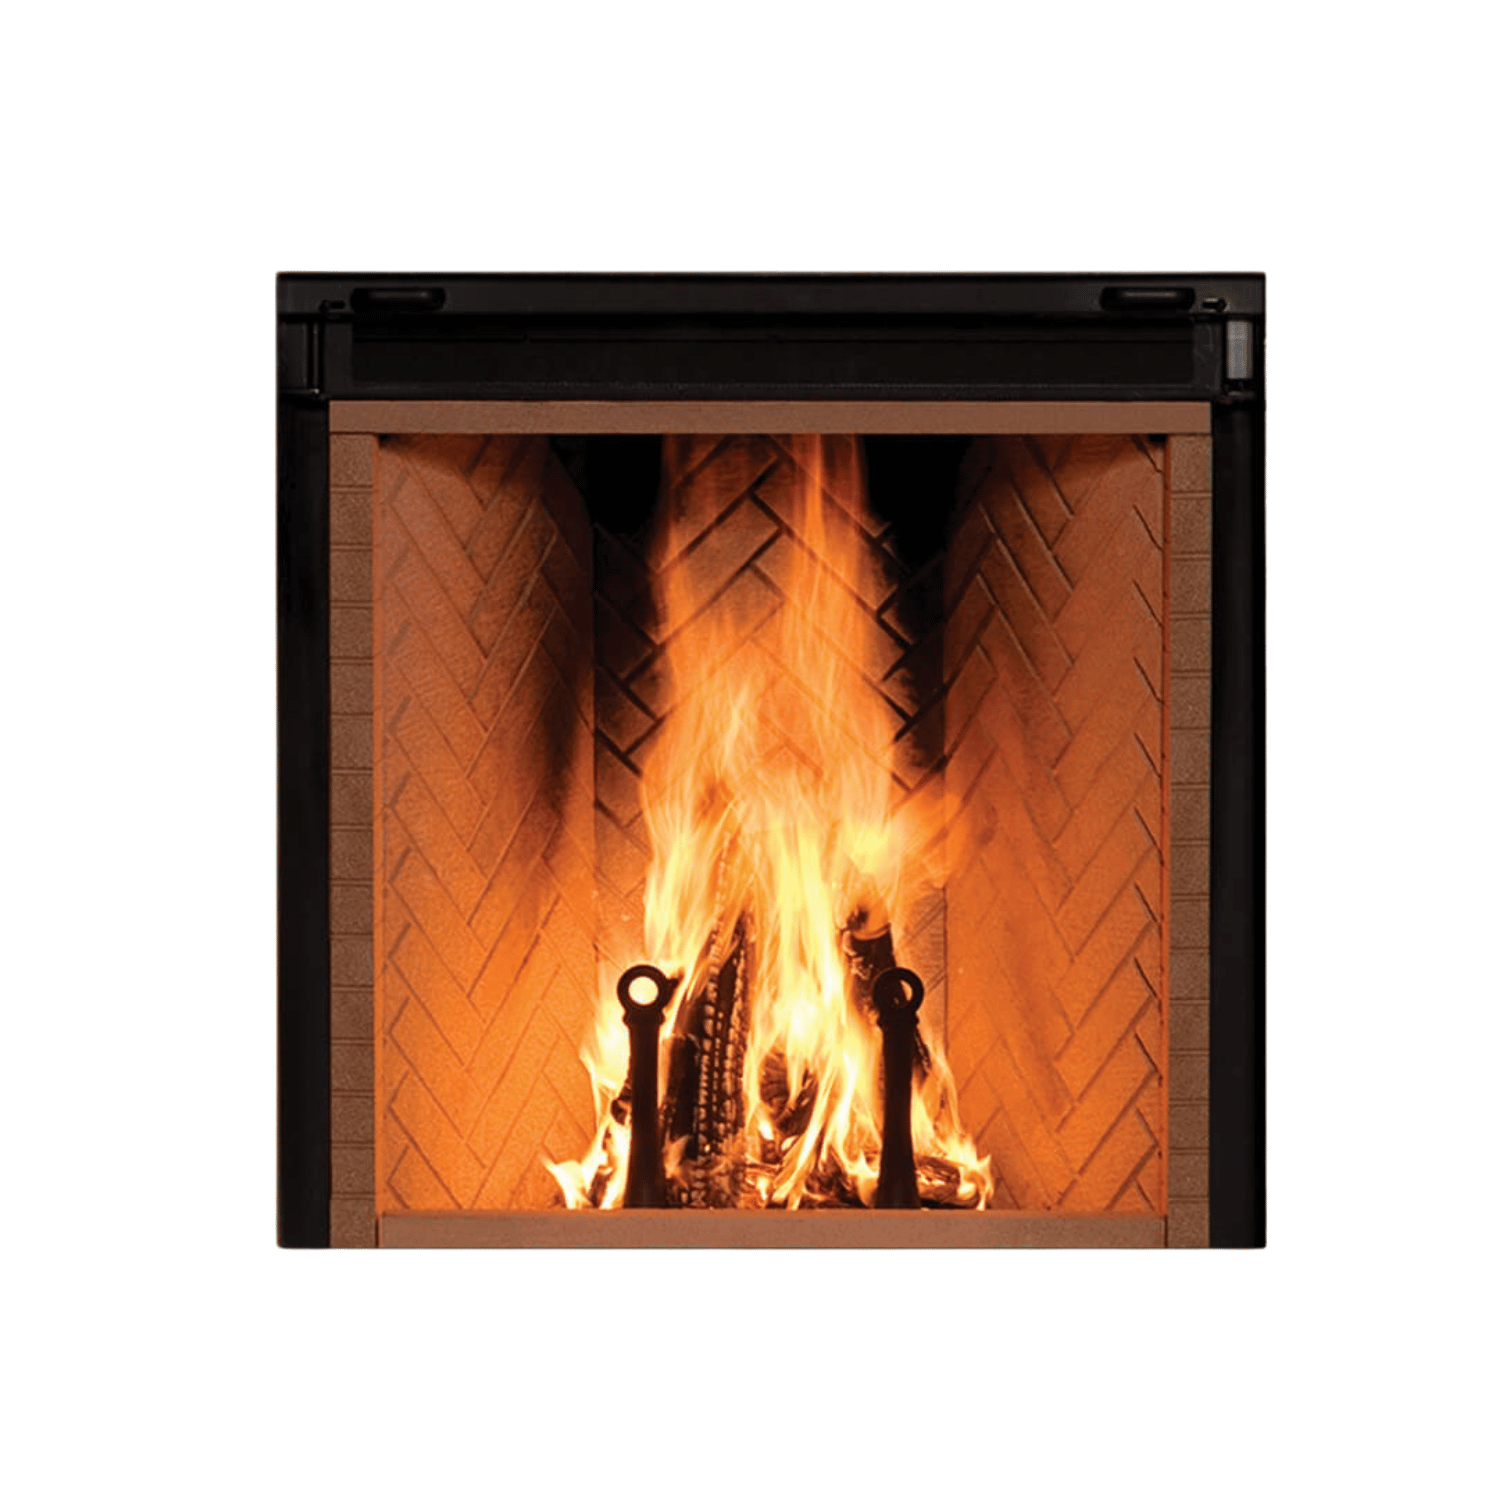 Fireplace Rumford 1500 – Renaissance